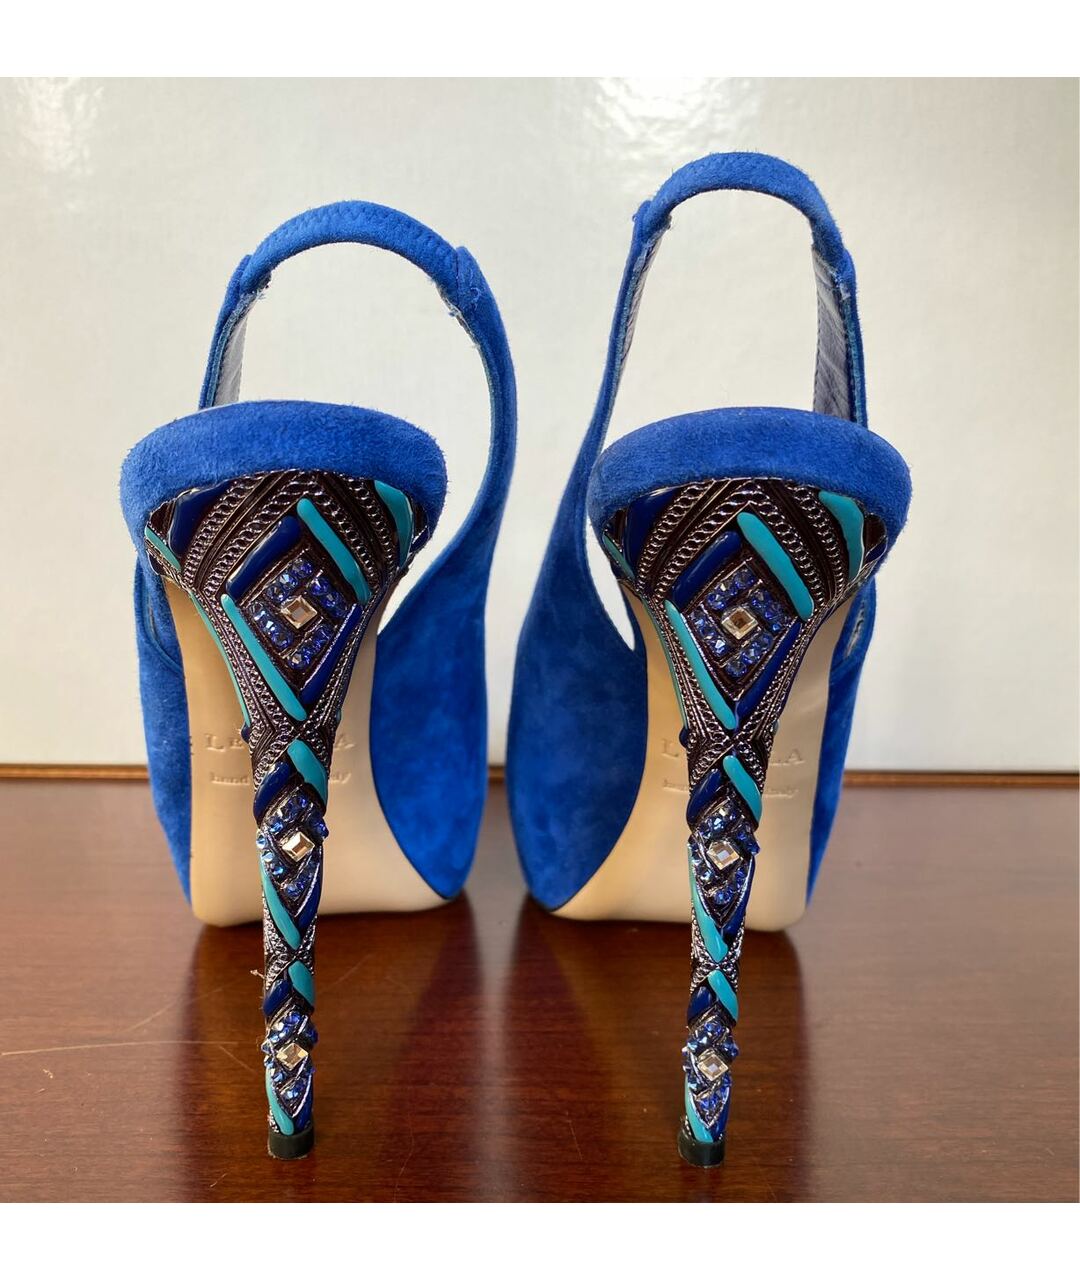 LE SILLA Синие замшевые туфли, фото 4